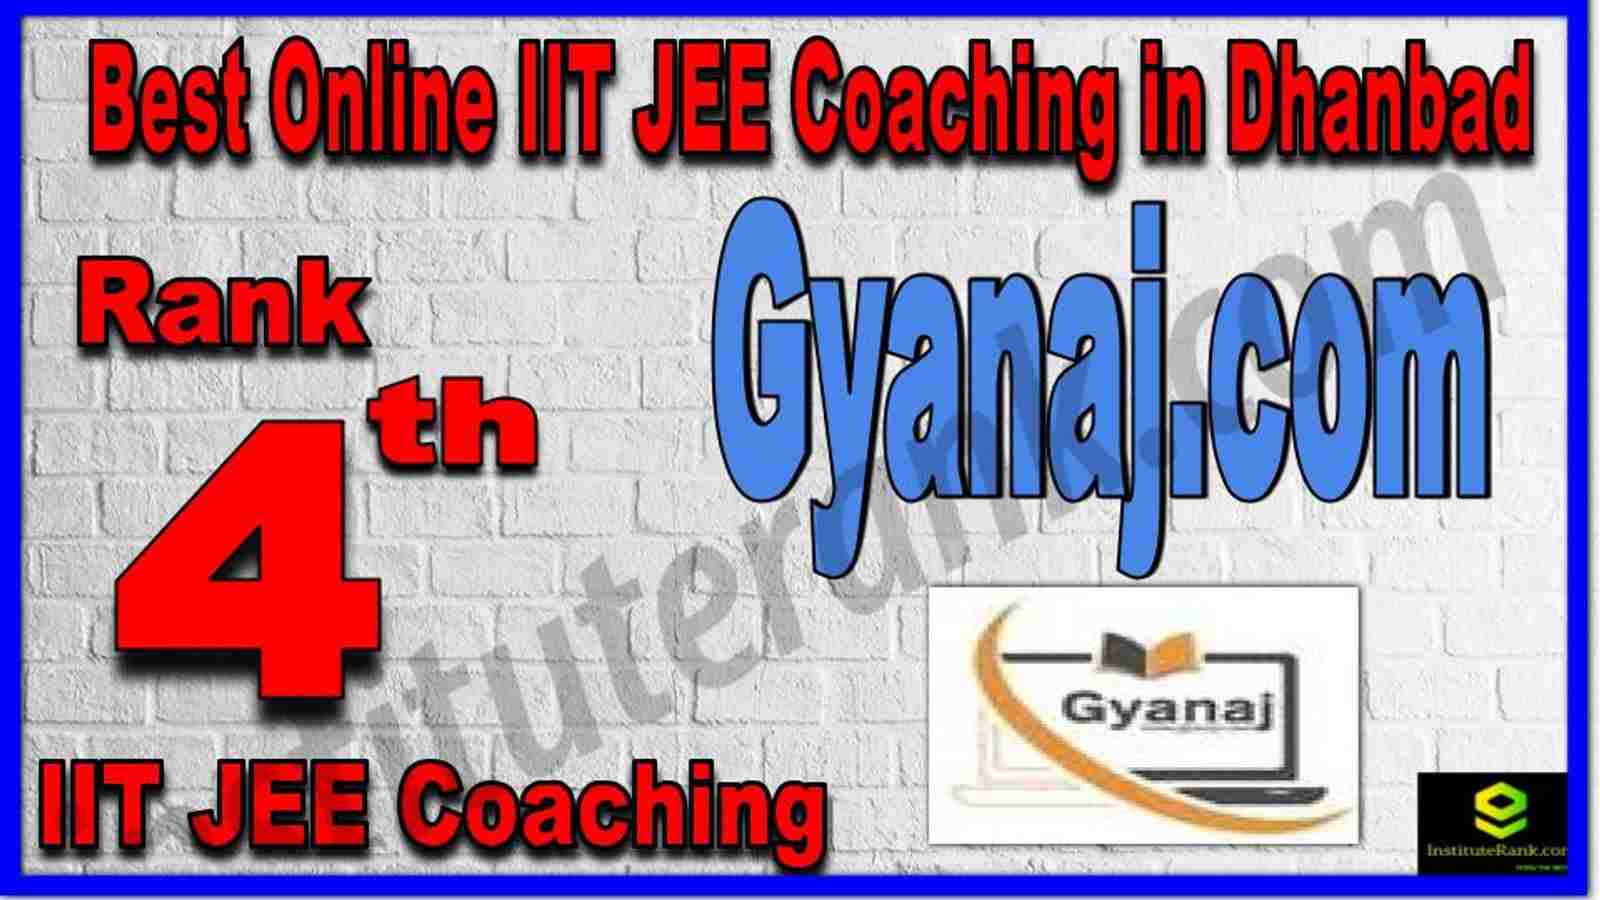 Rank 4th Best Online IIT JEE Coaching in Dhanbad